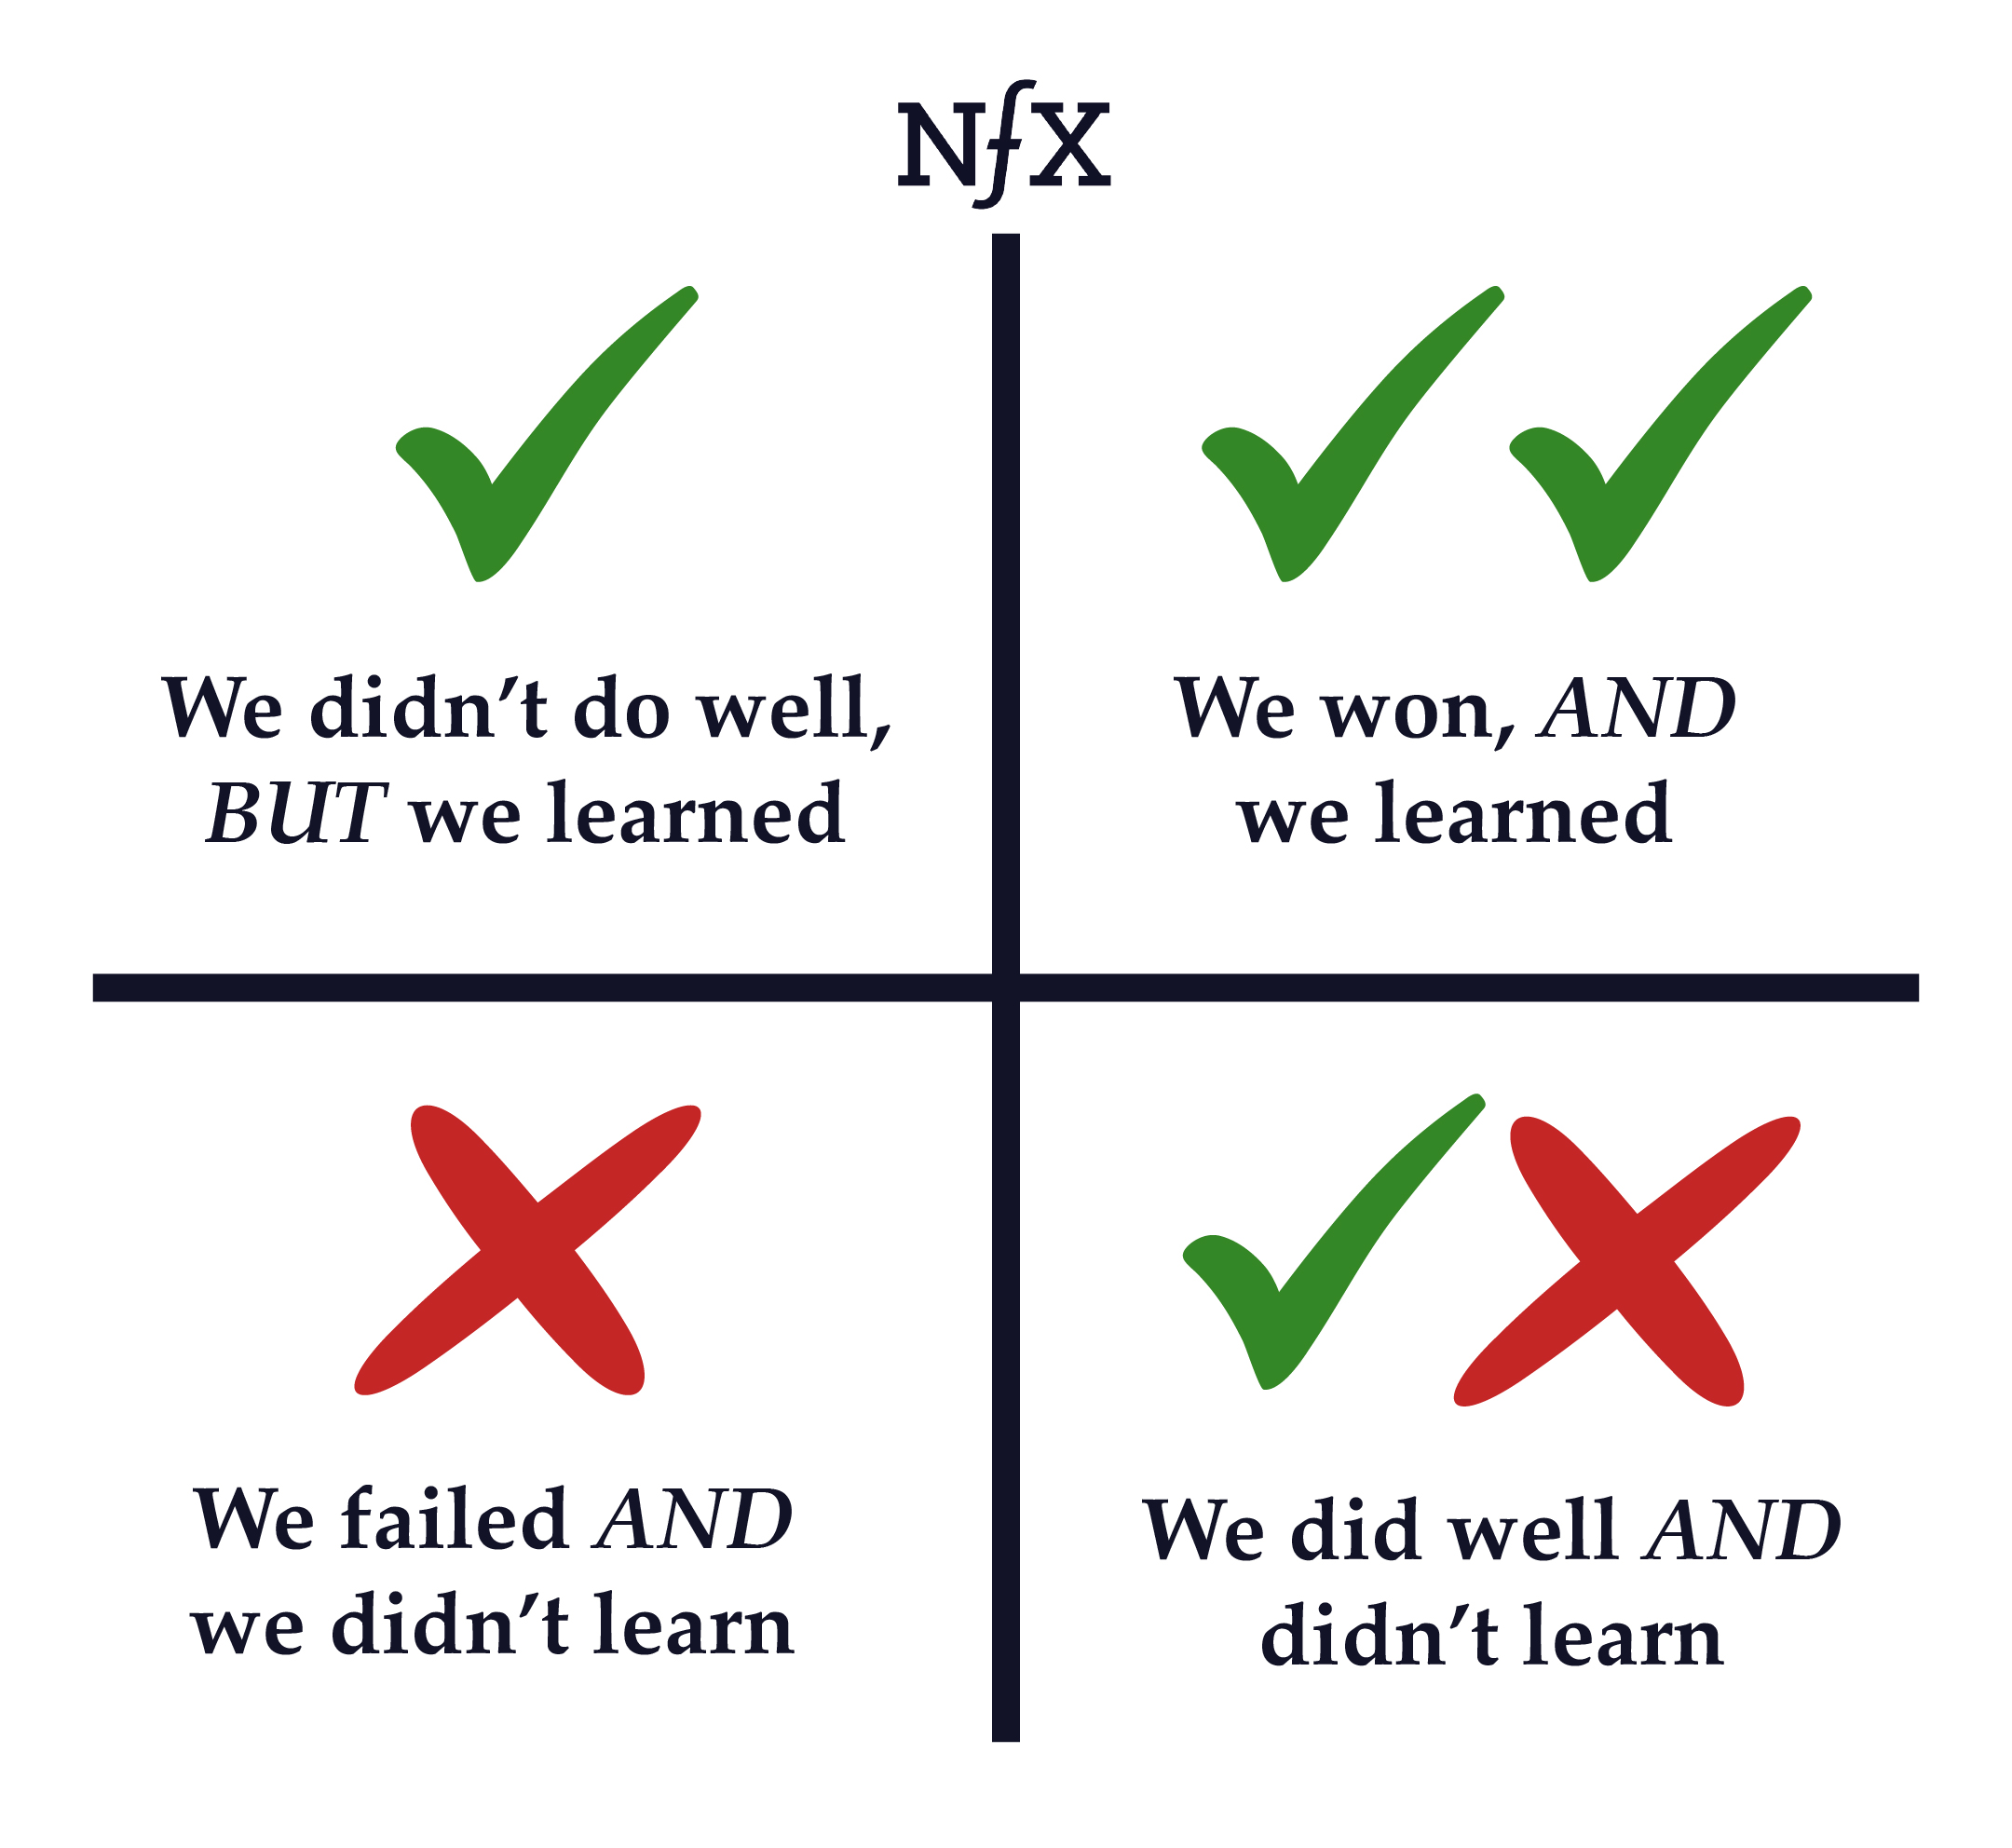 Learning Organization NFX